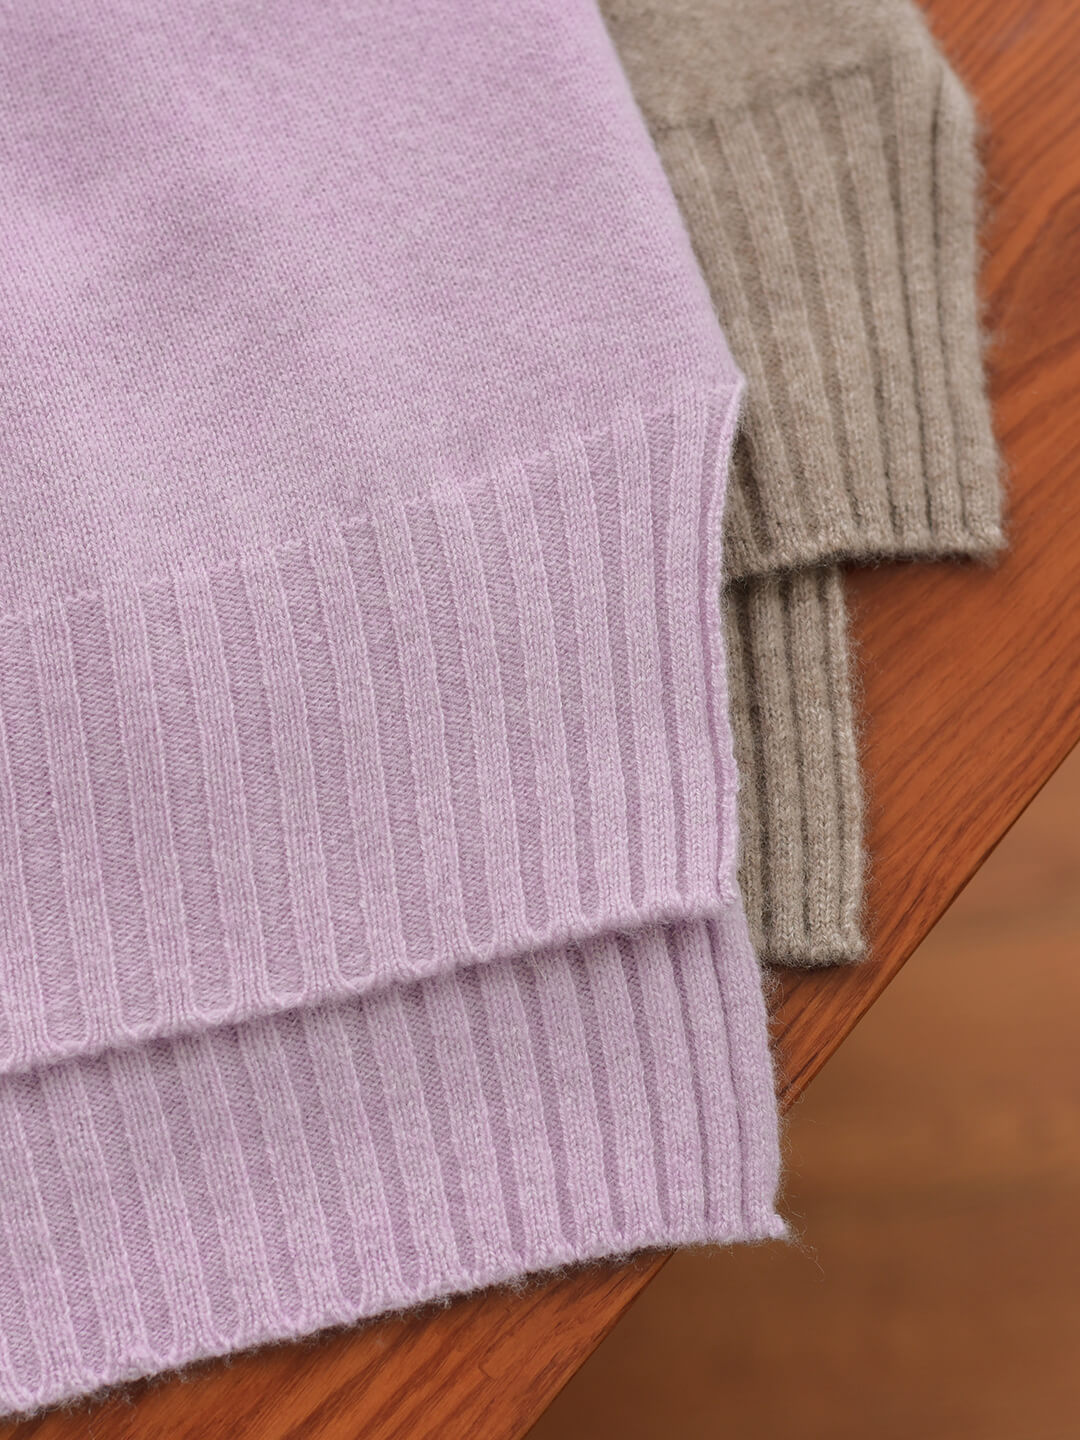 Simpleretro Eloise High Collar Wool Knit Top-detail4